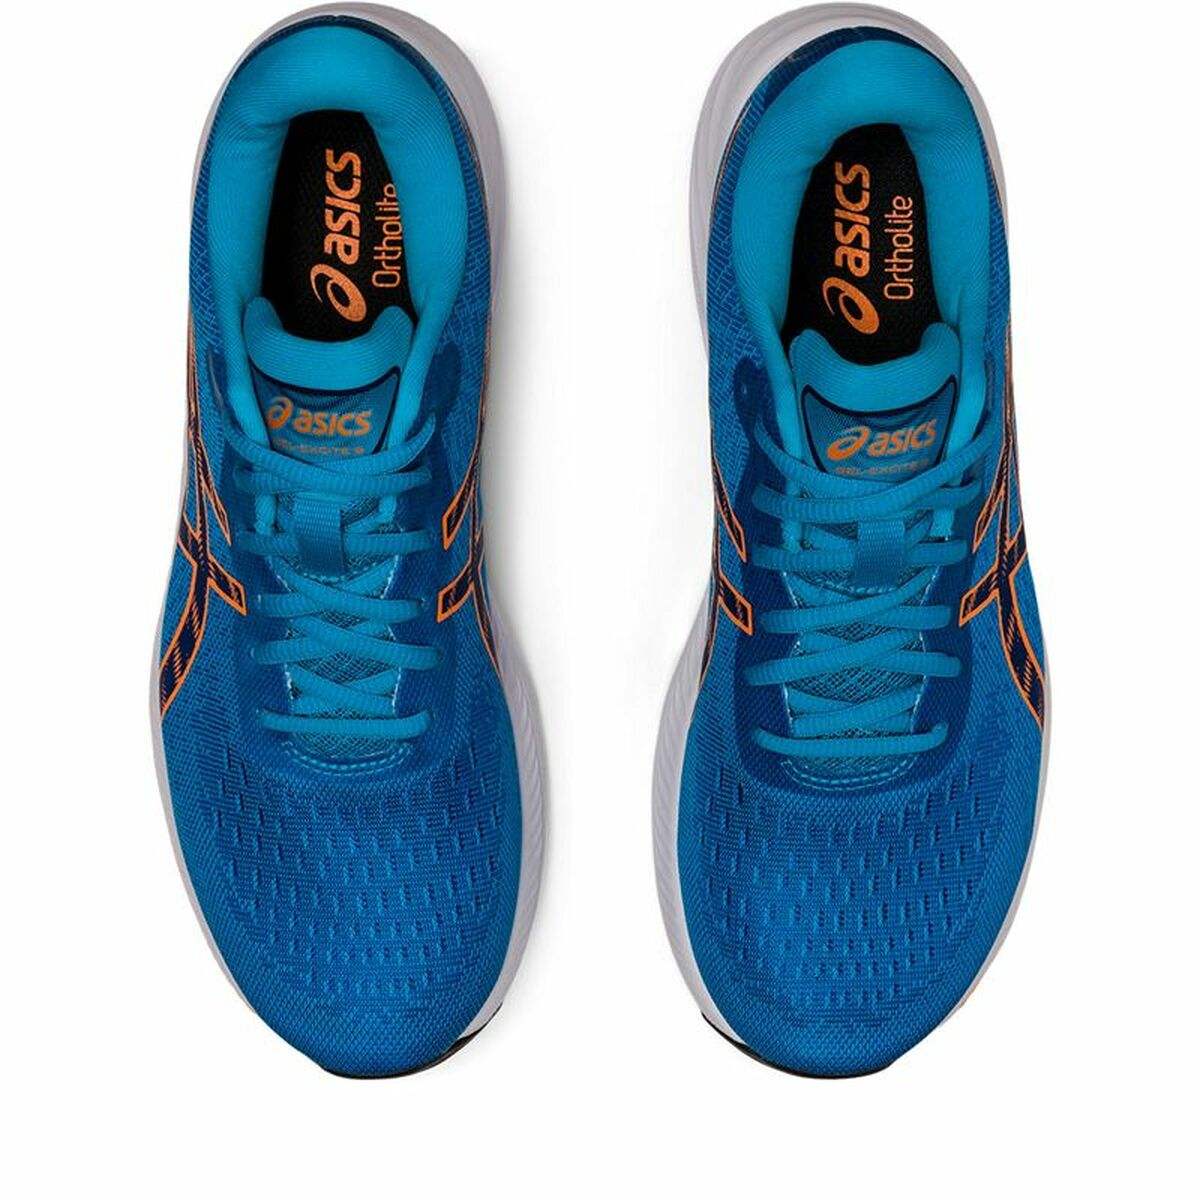 Chaussures de Running pour Adultes Asics Gel-Excite 9 Bleu - Asics - Jardin D'Eyden - jardindeyden.fr